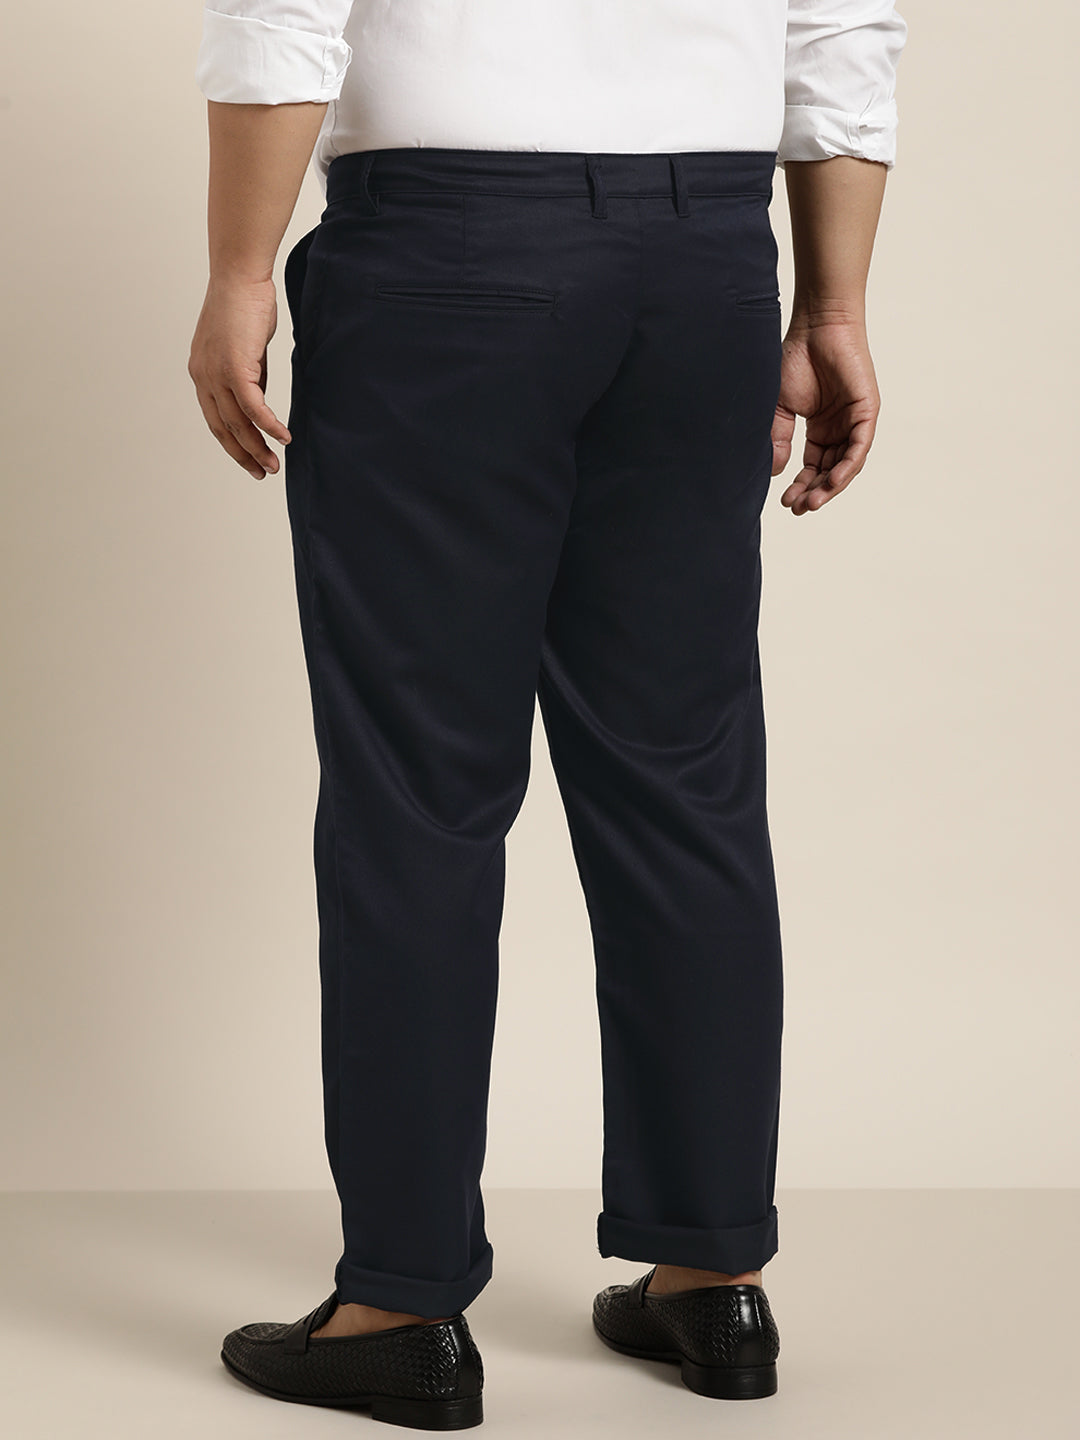 Men's Cotton Blend Dark Navy Blue Solid Trousers